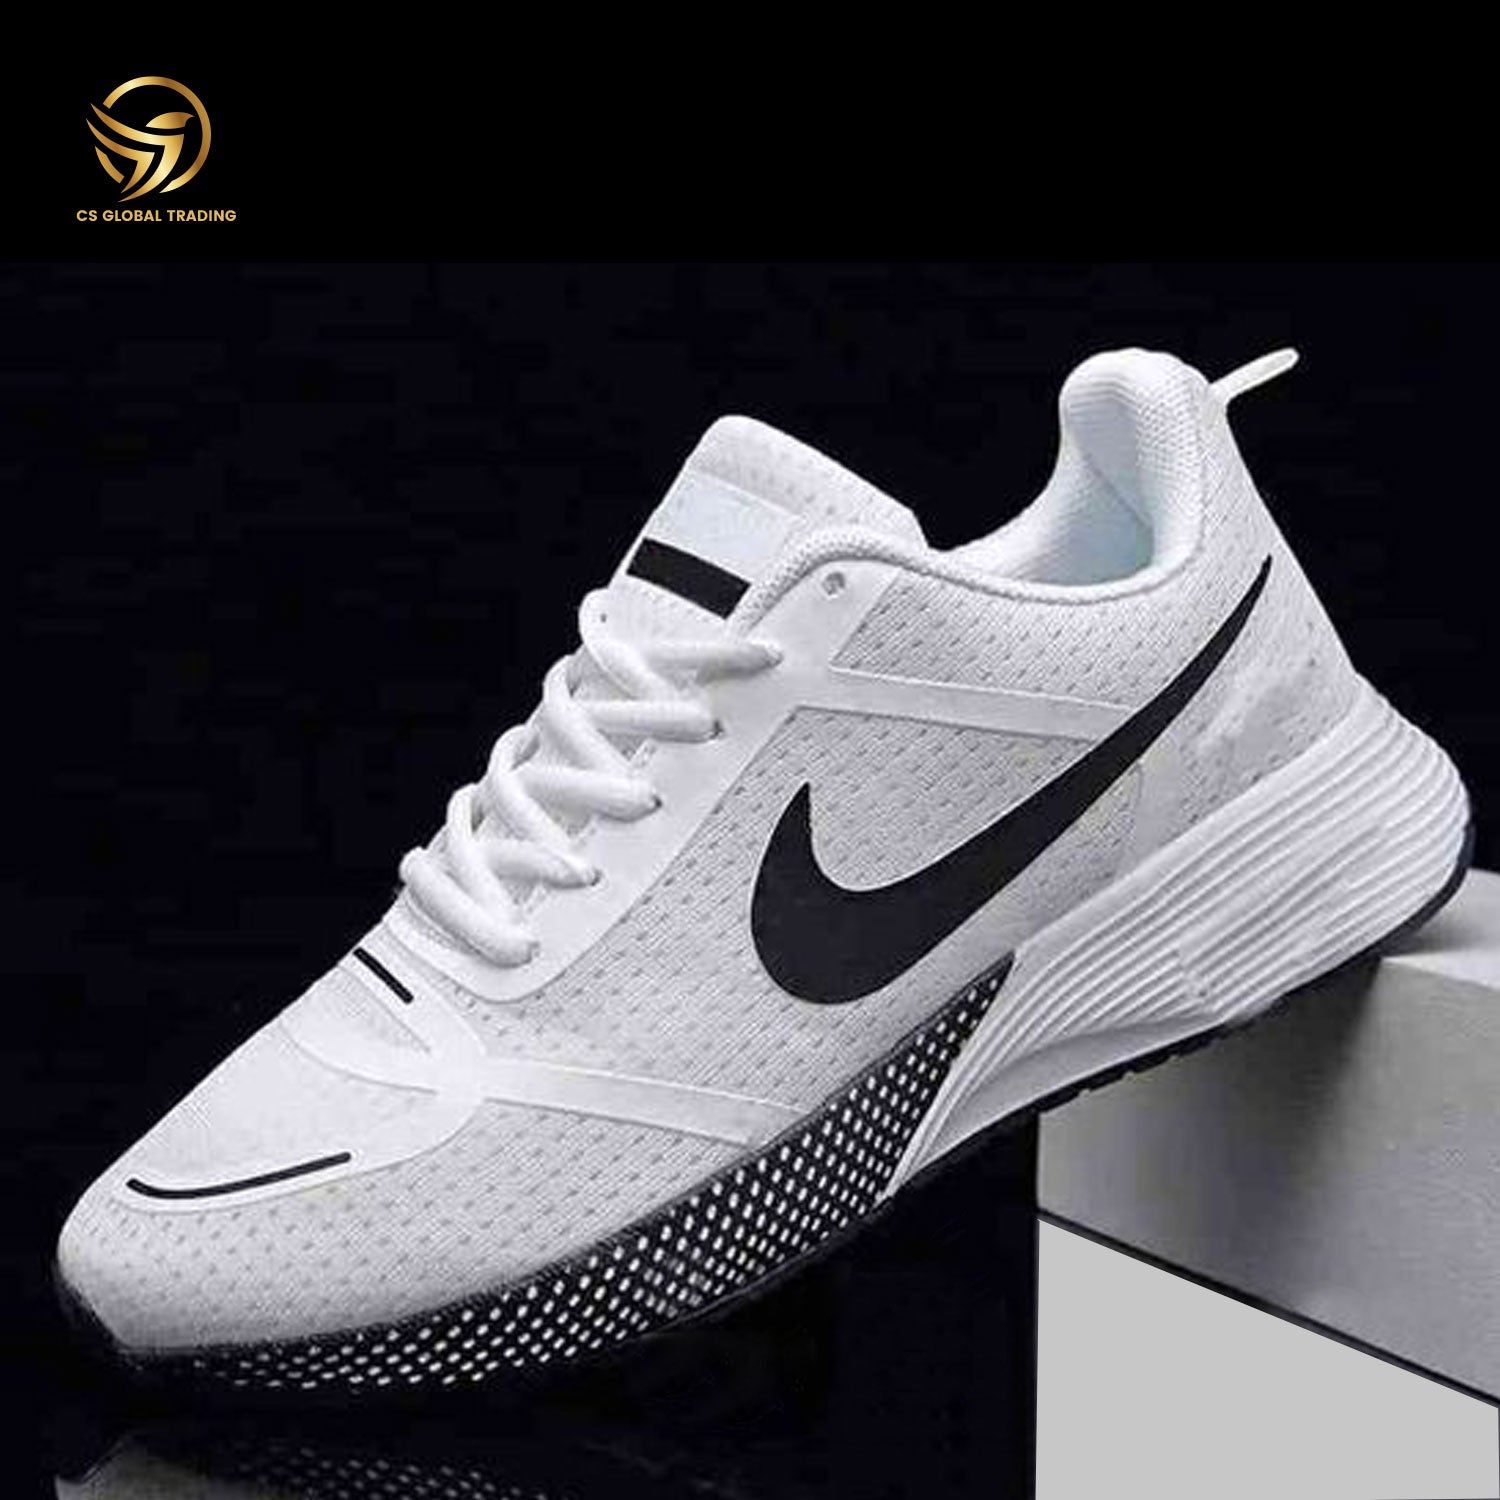 Nike zoom sneaker shoes for men